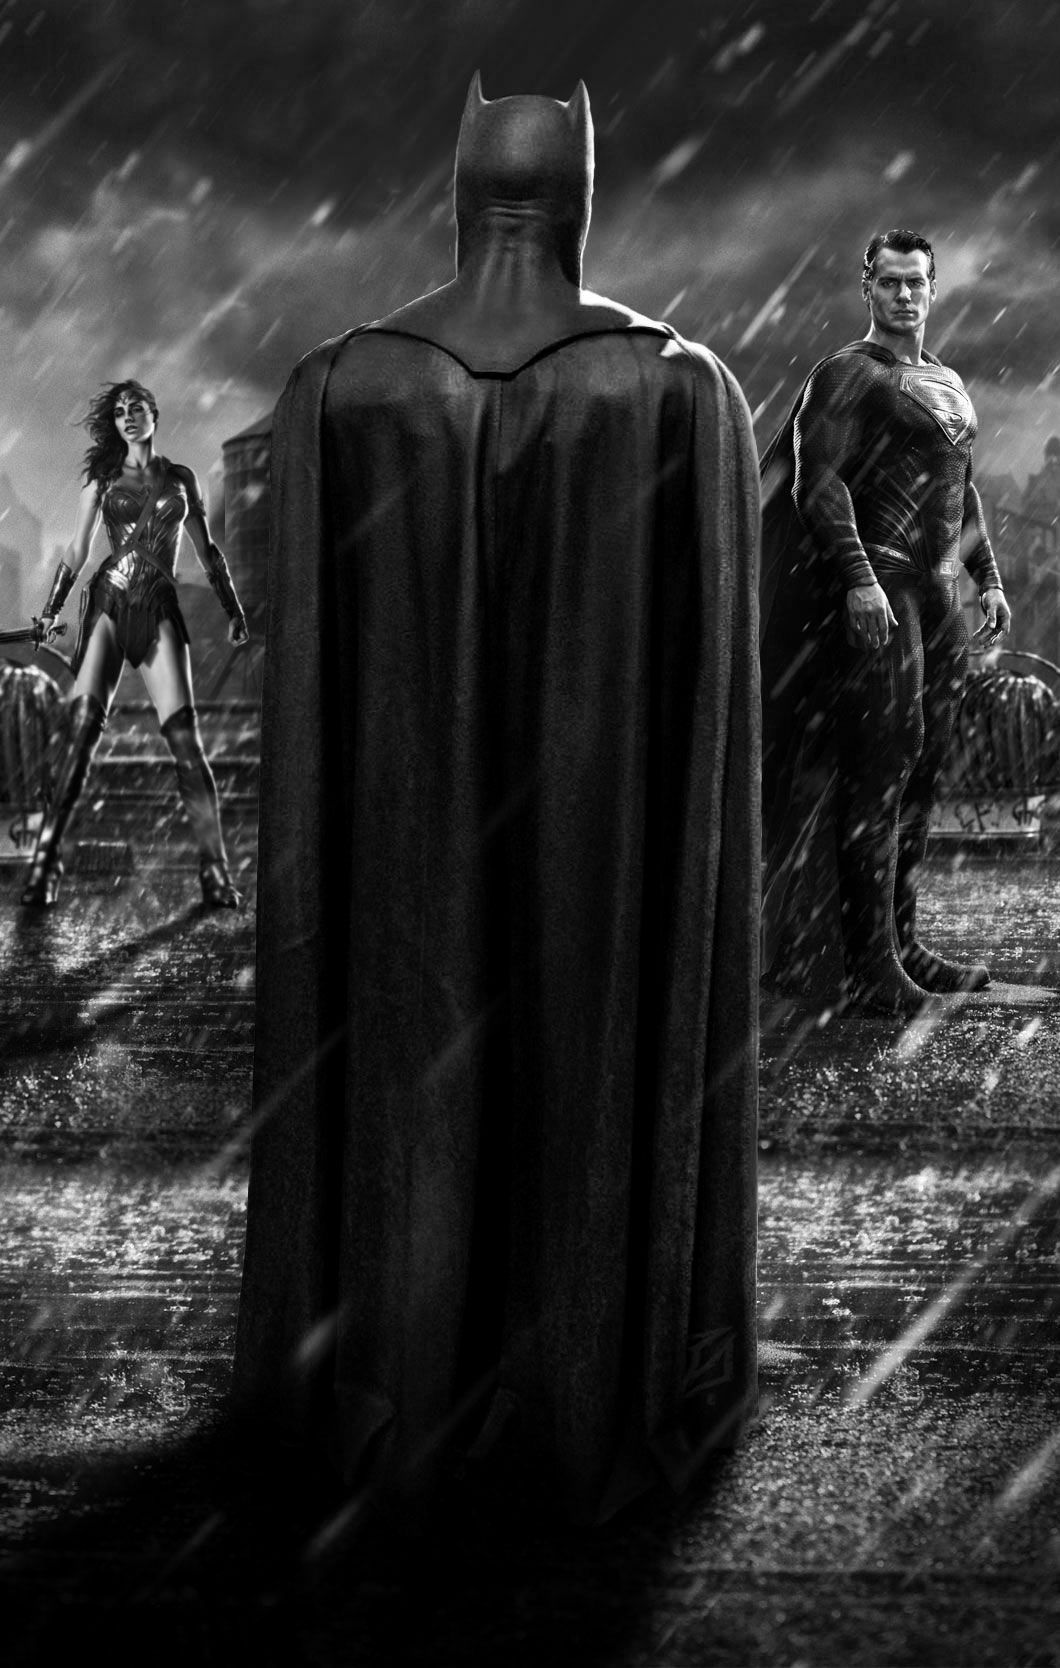 Batman vs superman dawn of justice Full HD wallpapers for PC